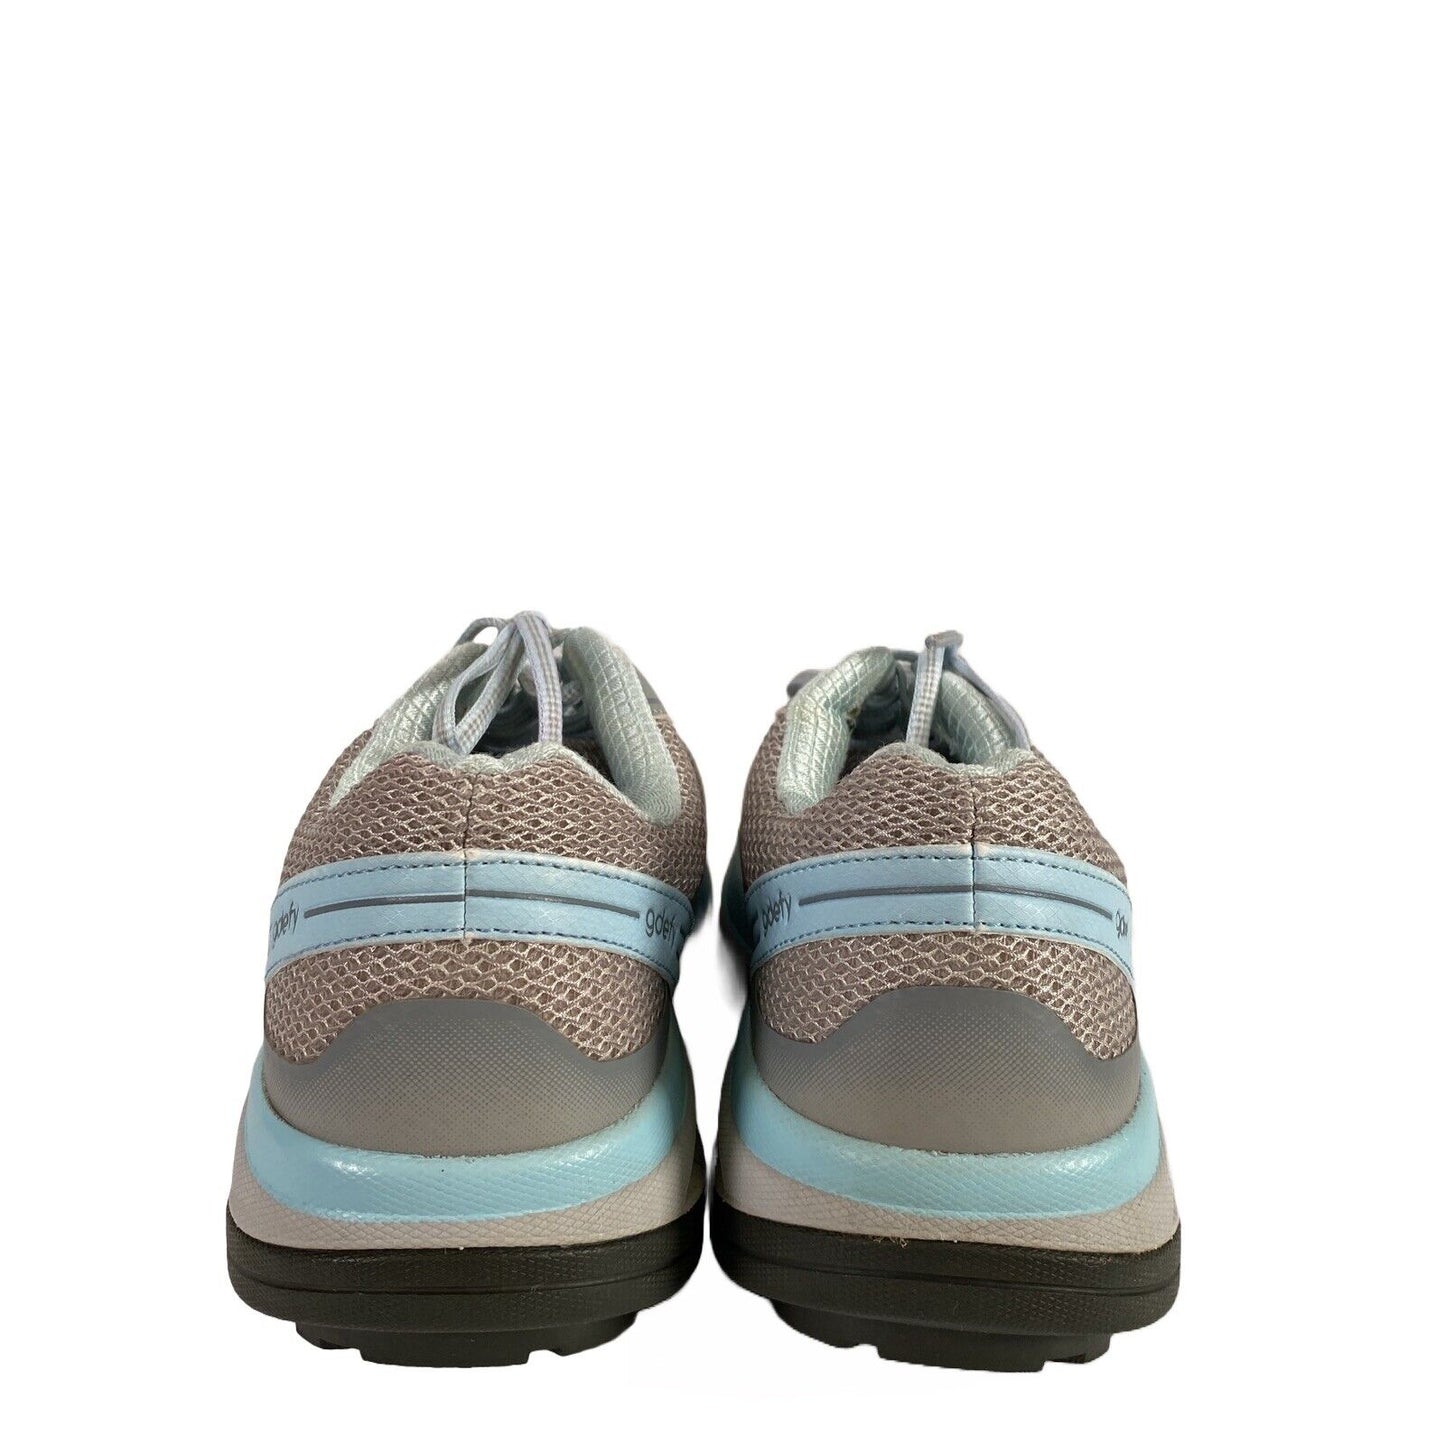 gdefy Women's Gray/Blue Gravity Defyer Lace Up Walking Sneakers - 10